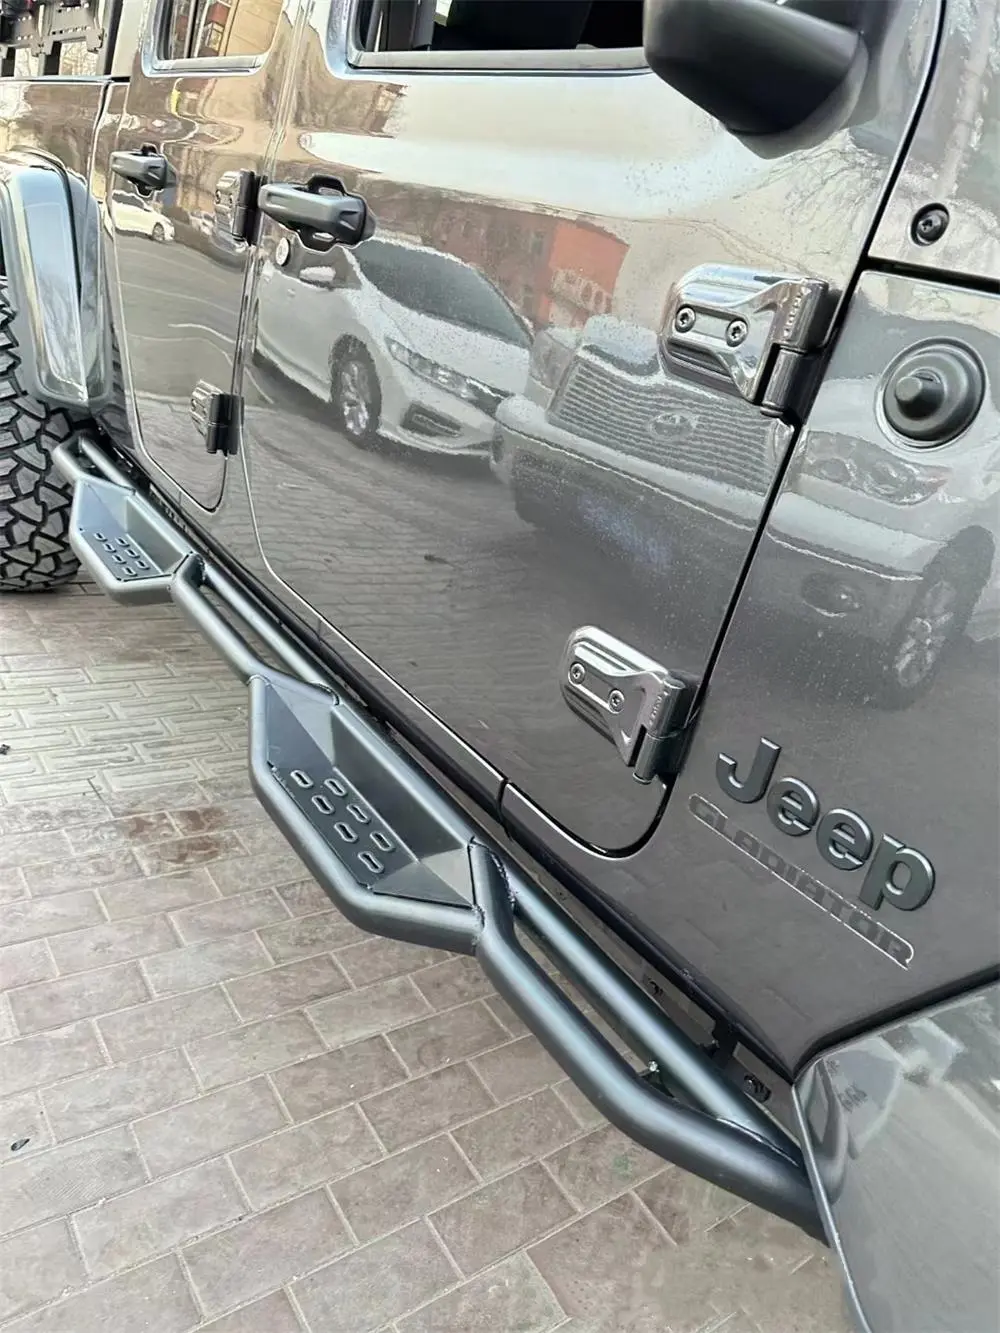 Трубчатая боковая подножка Bullbar для поставщика Jeep Wrangler JL